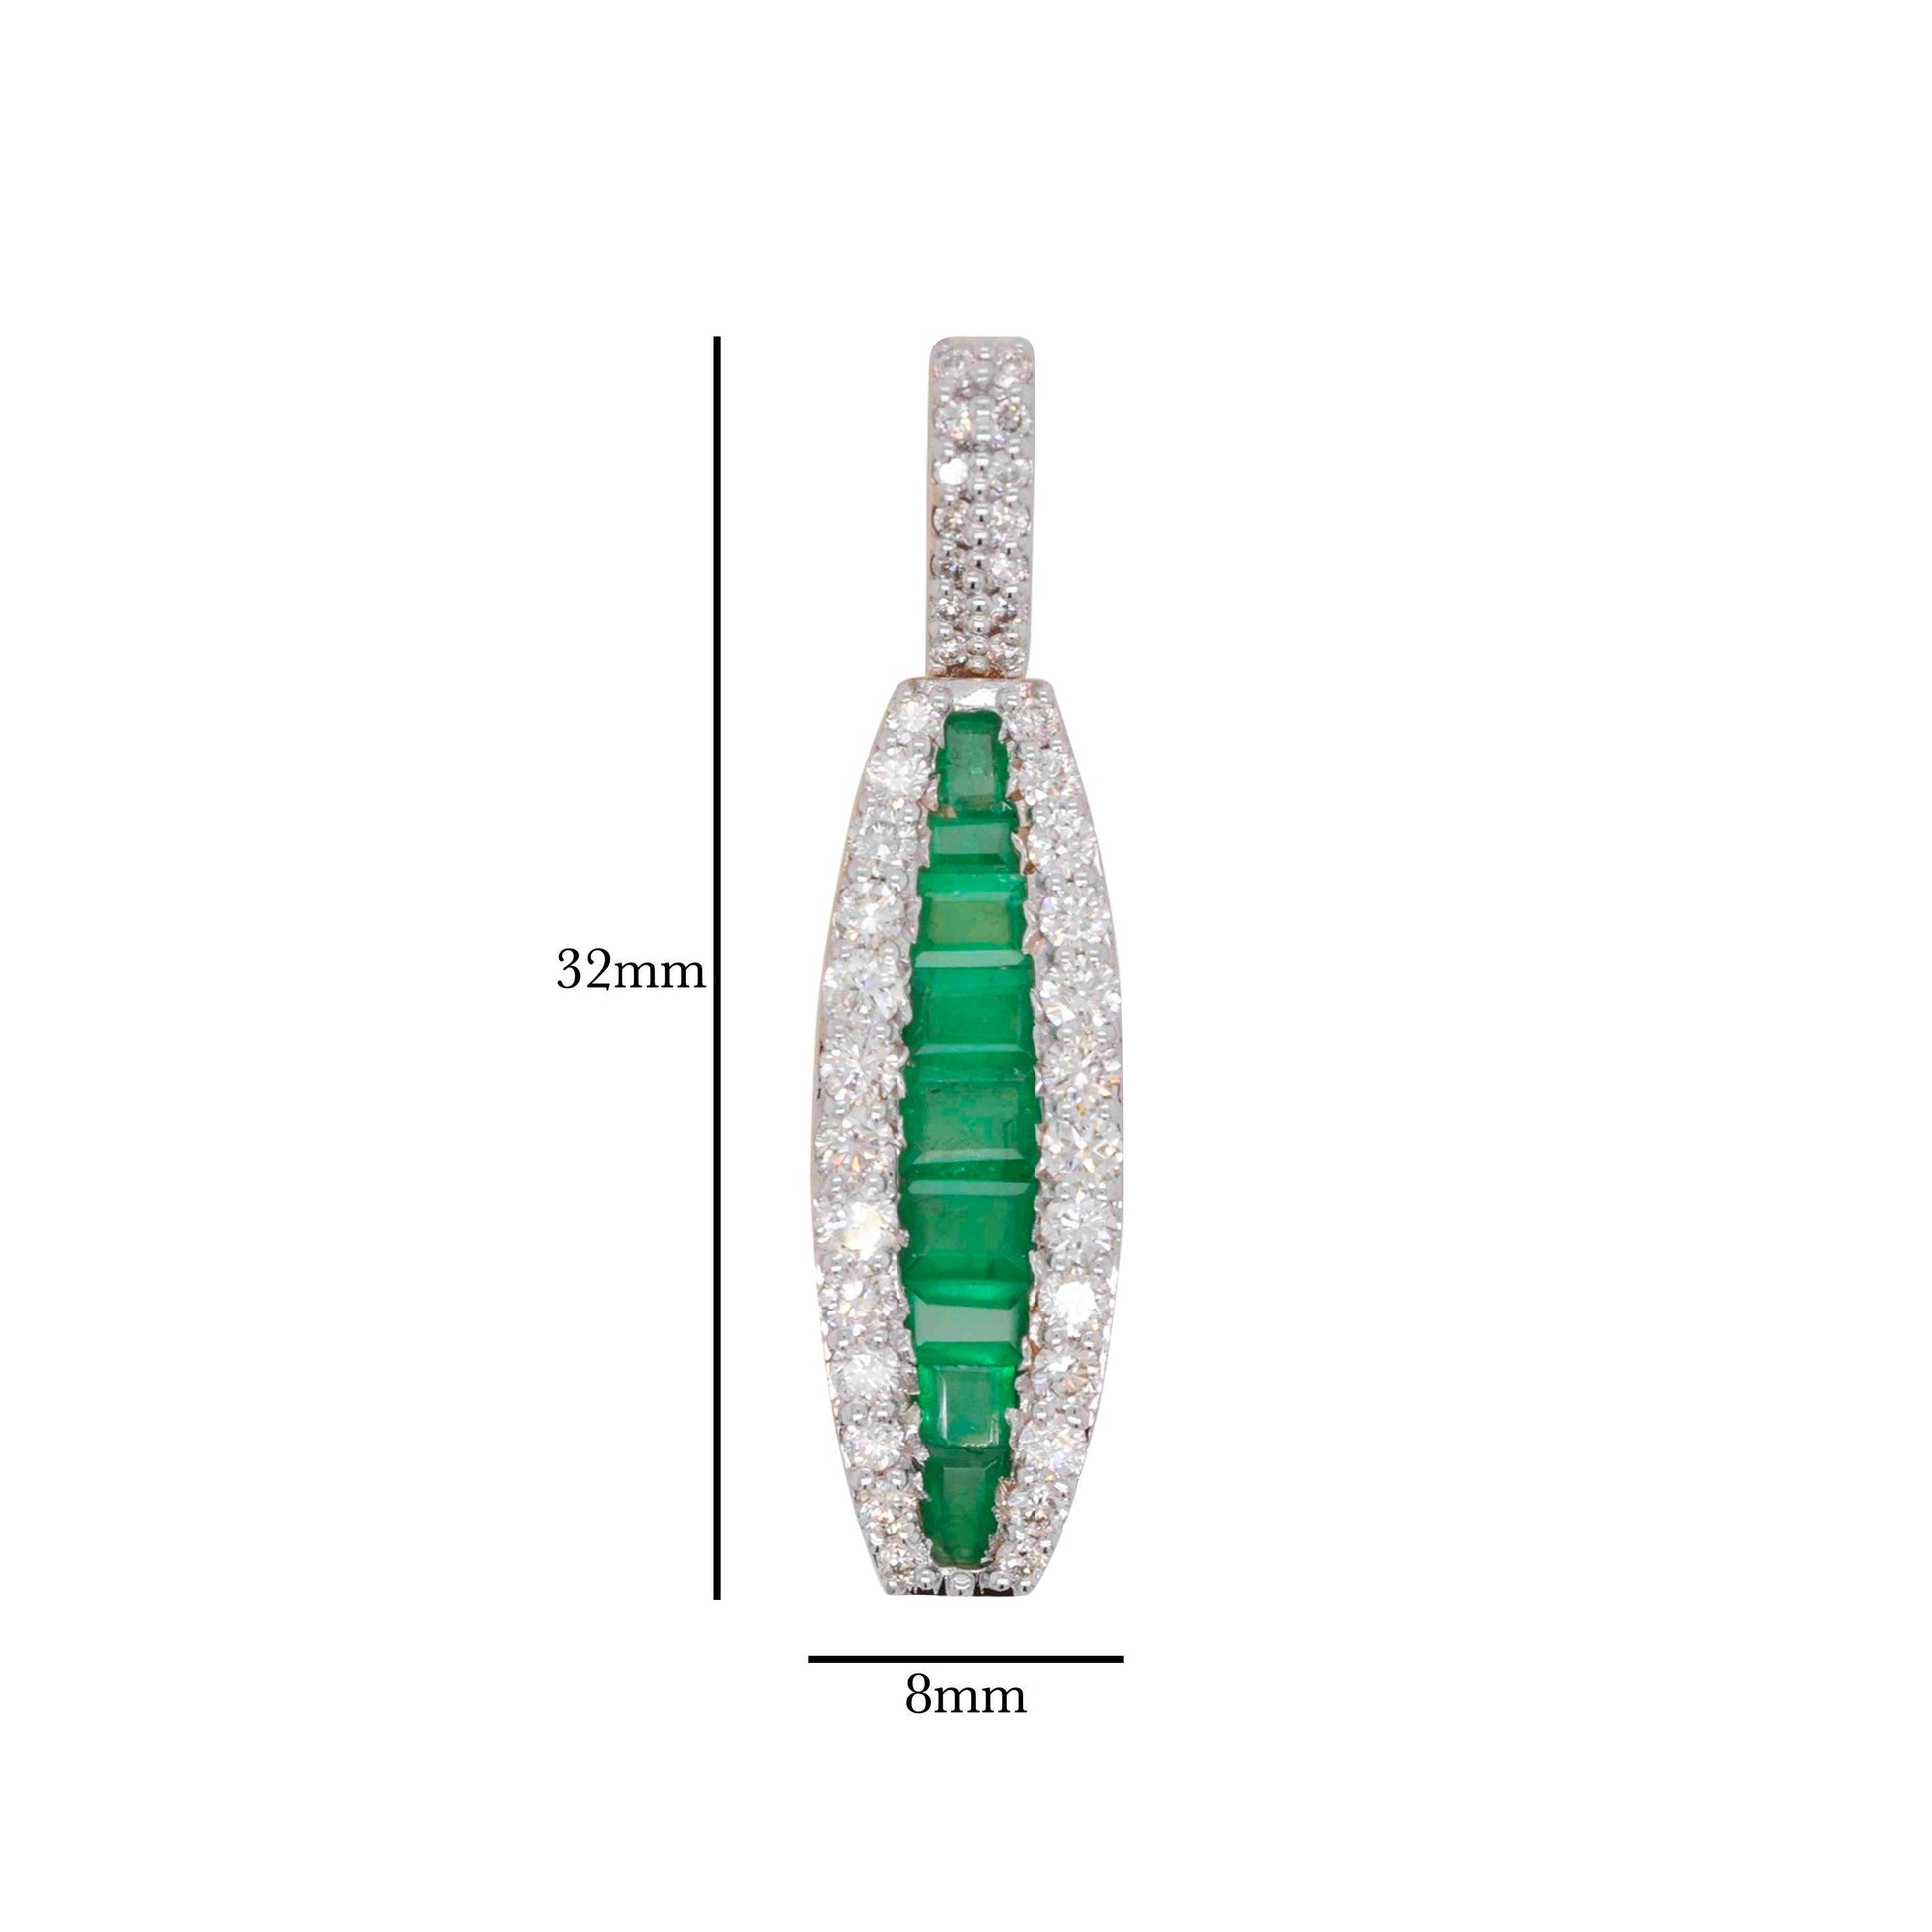 18K Gold Emerald Baguette Art Deco Diamond Pendant Necklace - Vaibhav Dhadda Jewelry